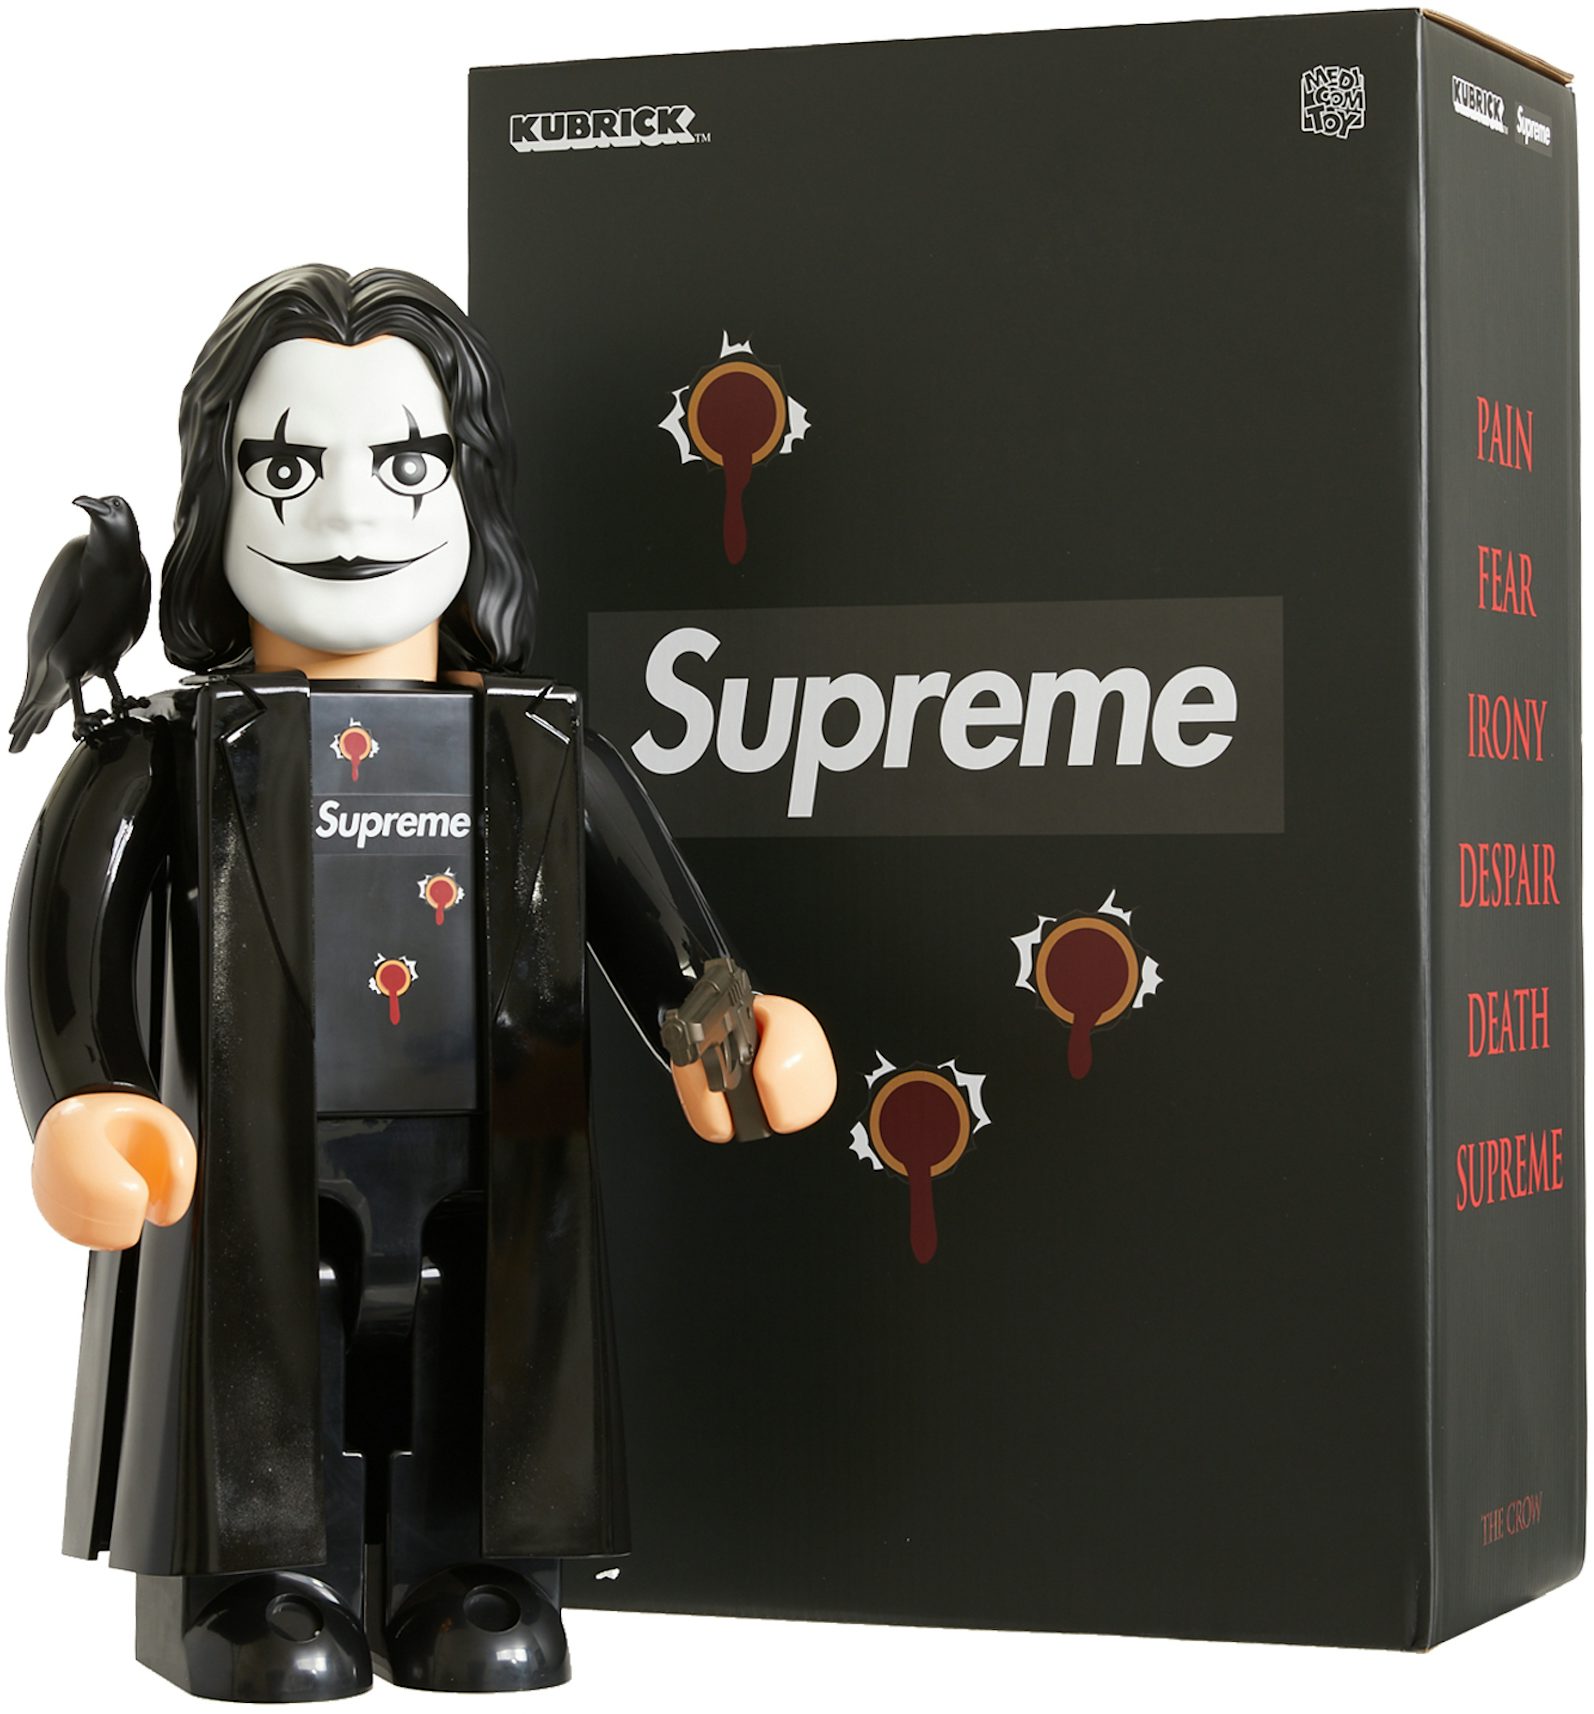 Supreme x The Crow Kubrick Bearbrick 1000% Medicom Be@rbrick IN HAND